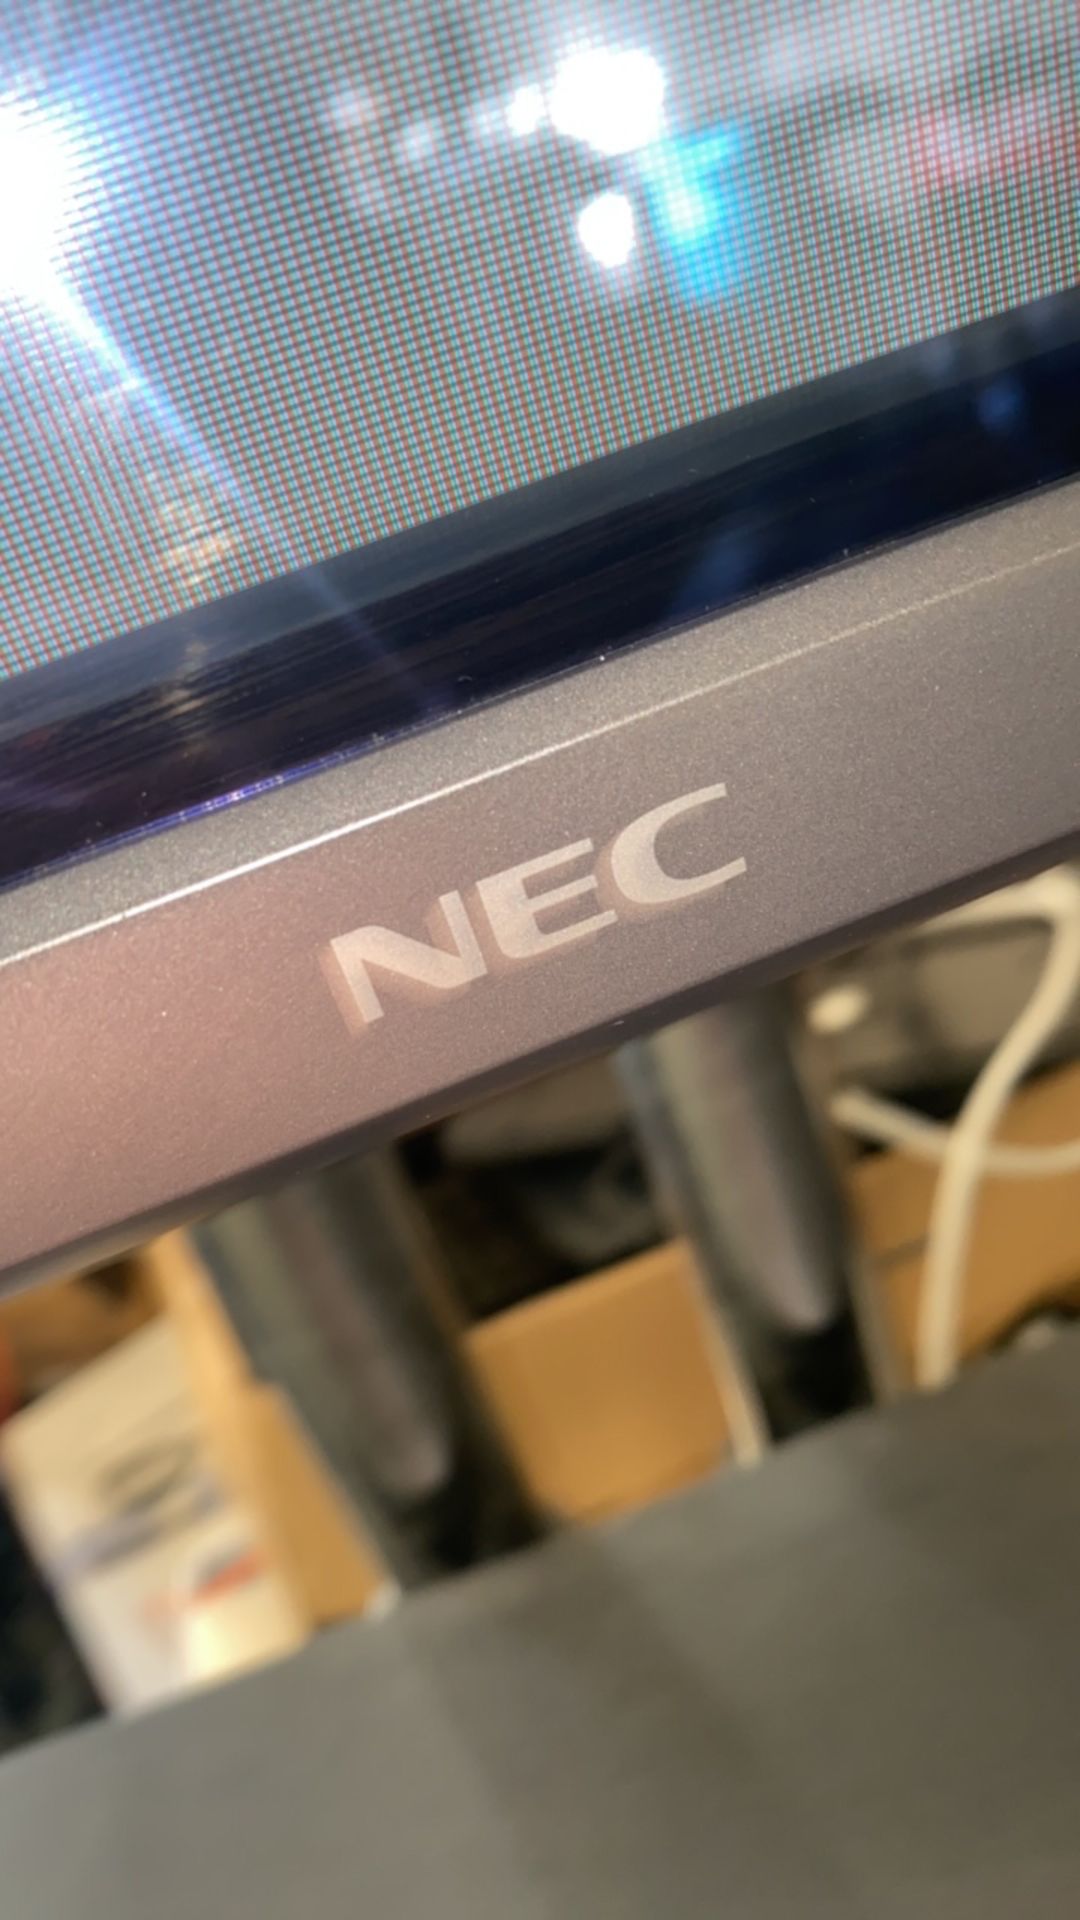 NEC TV On Wheels - Image 2 of 5